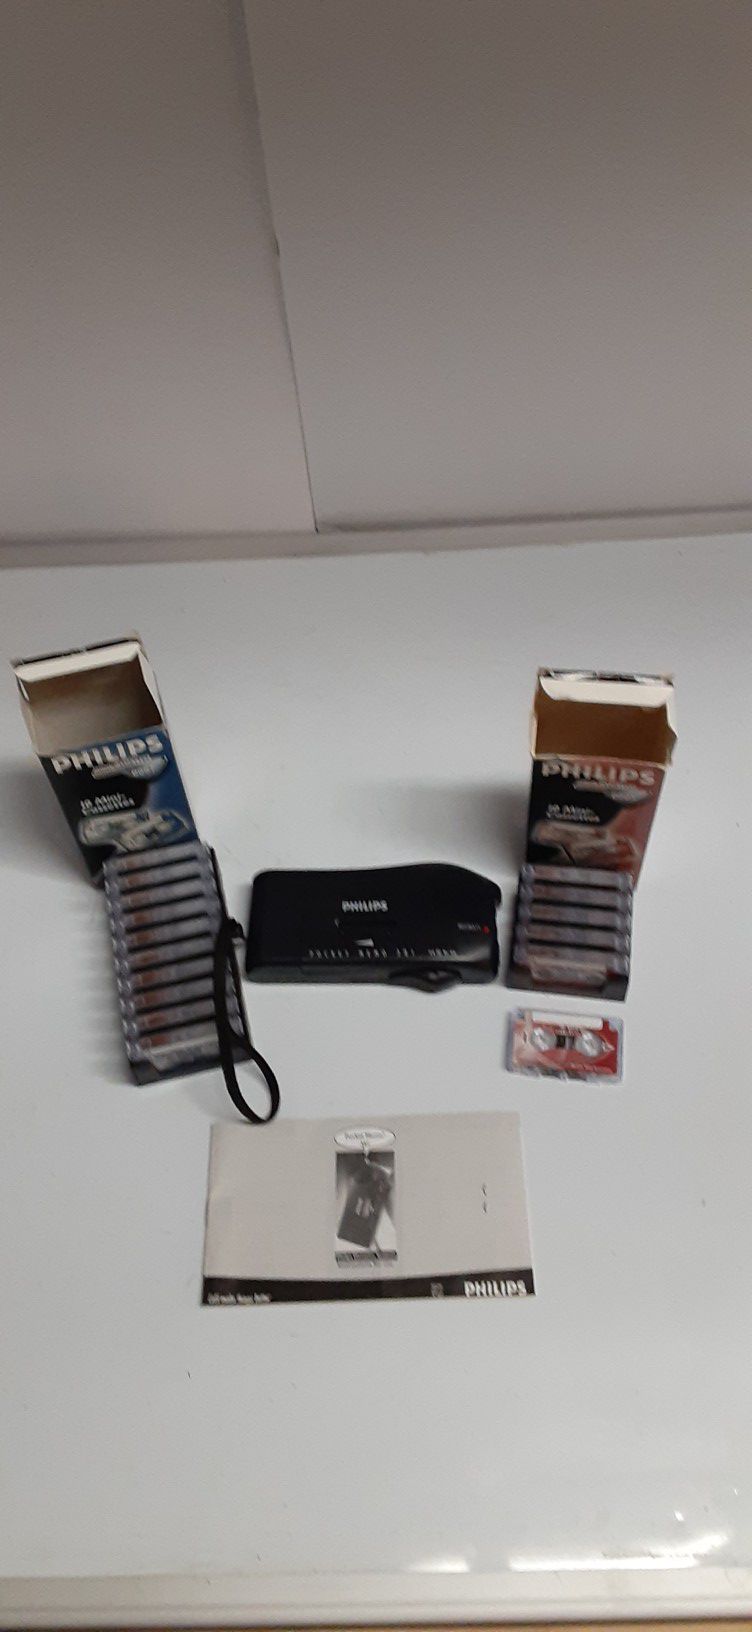 Classic Philip's 381 Pocket Memo Mini Cassette Voice Recorder + (10) 0007 & (6) 0005 Mini Cassettes & Manual